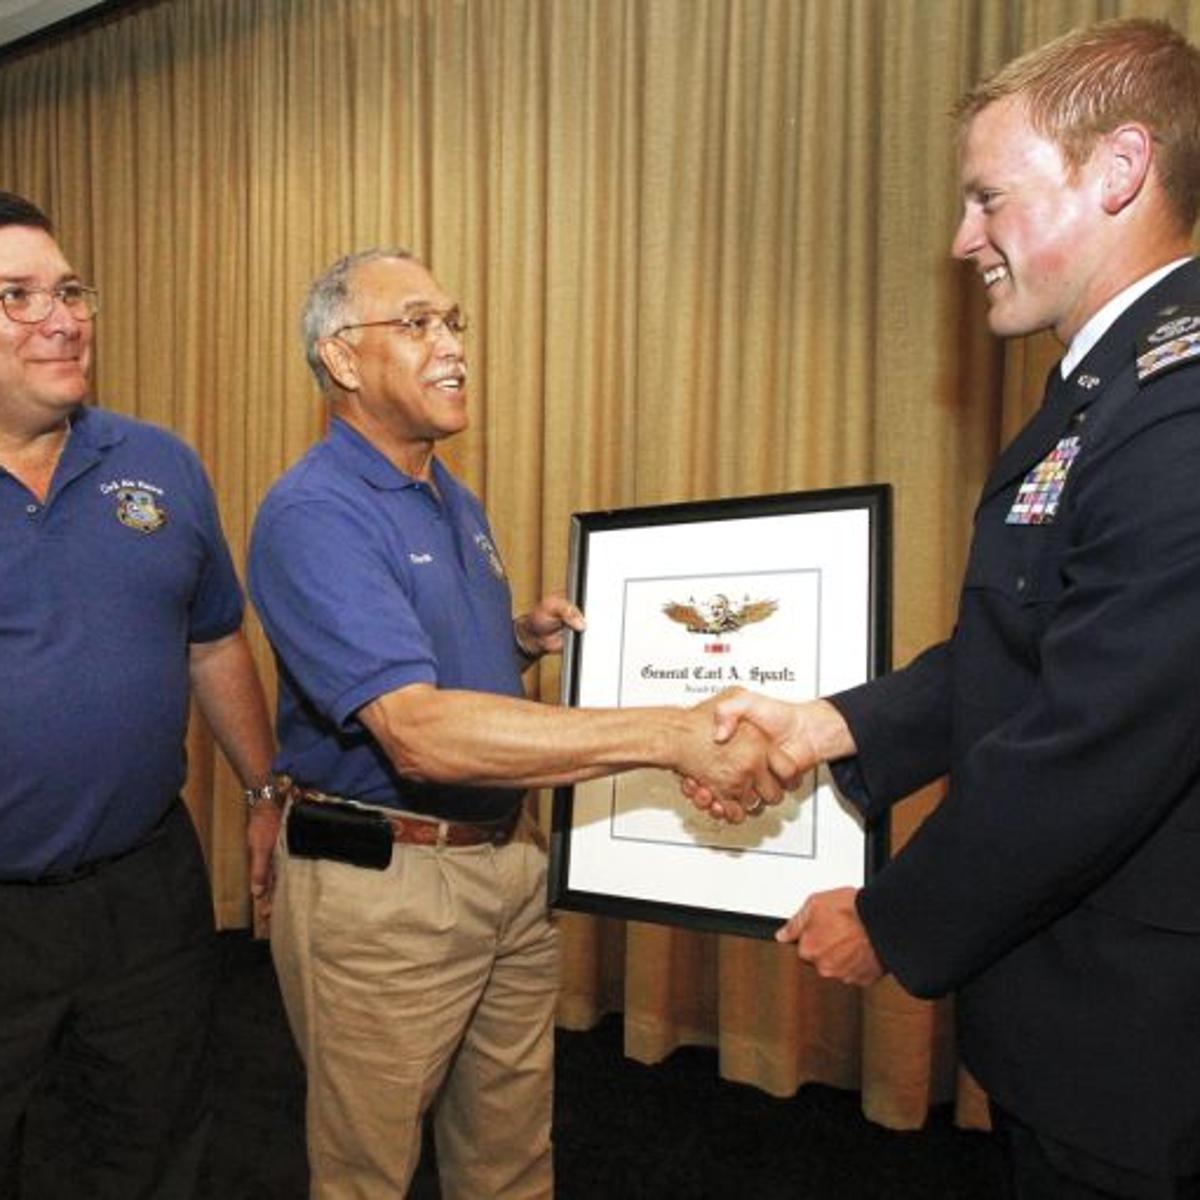 Cadet earns highest award